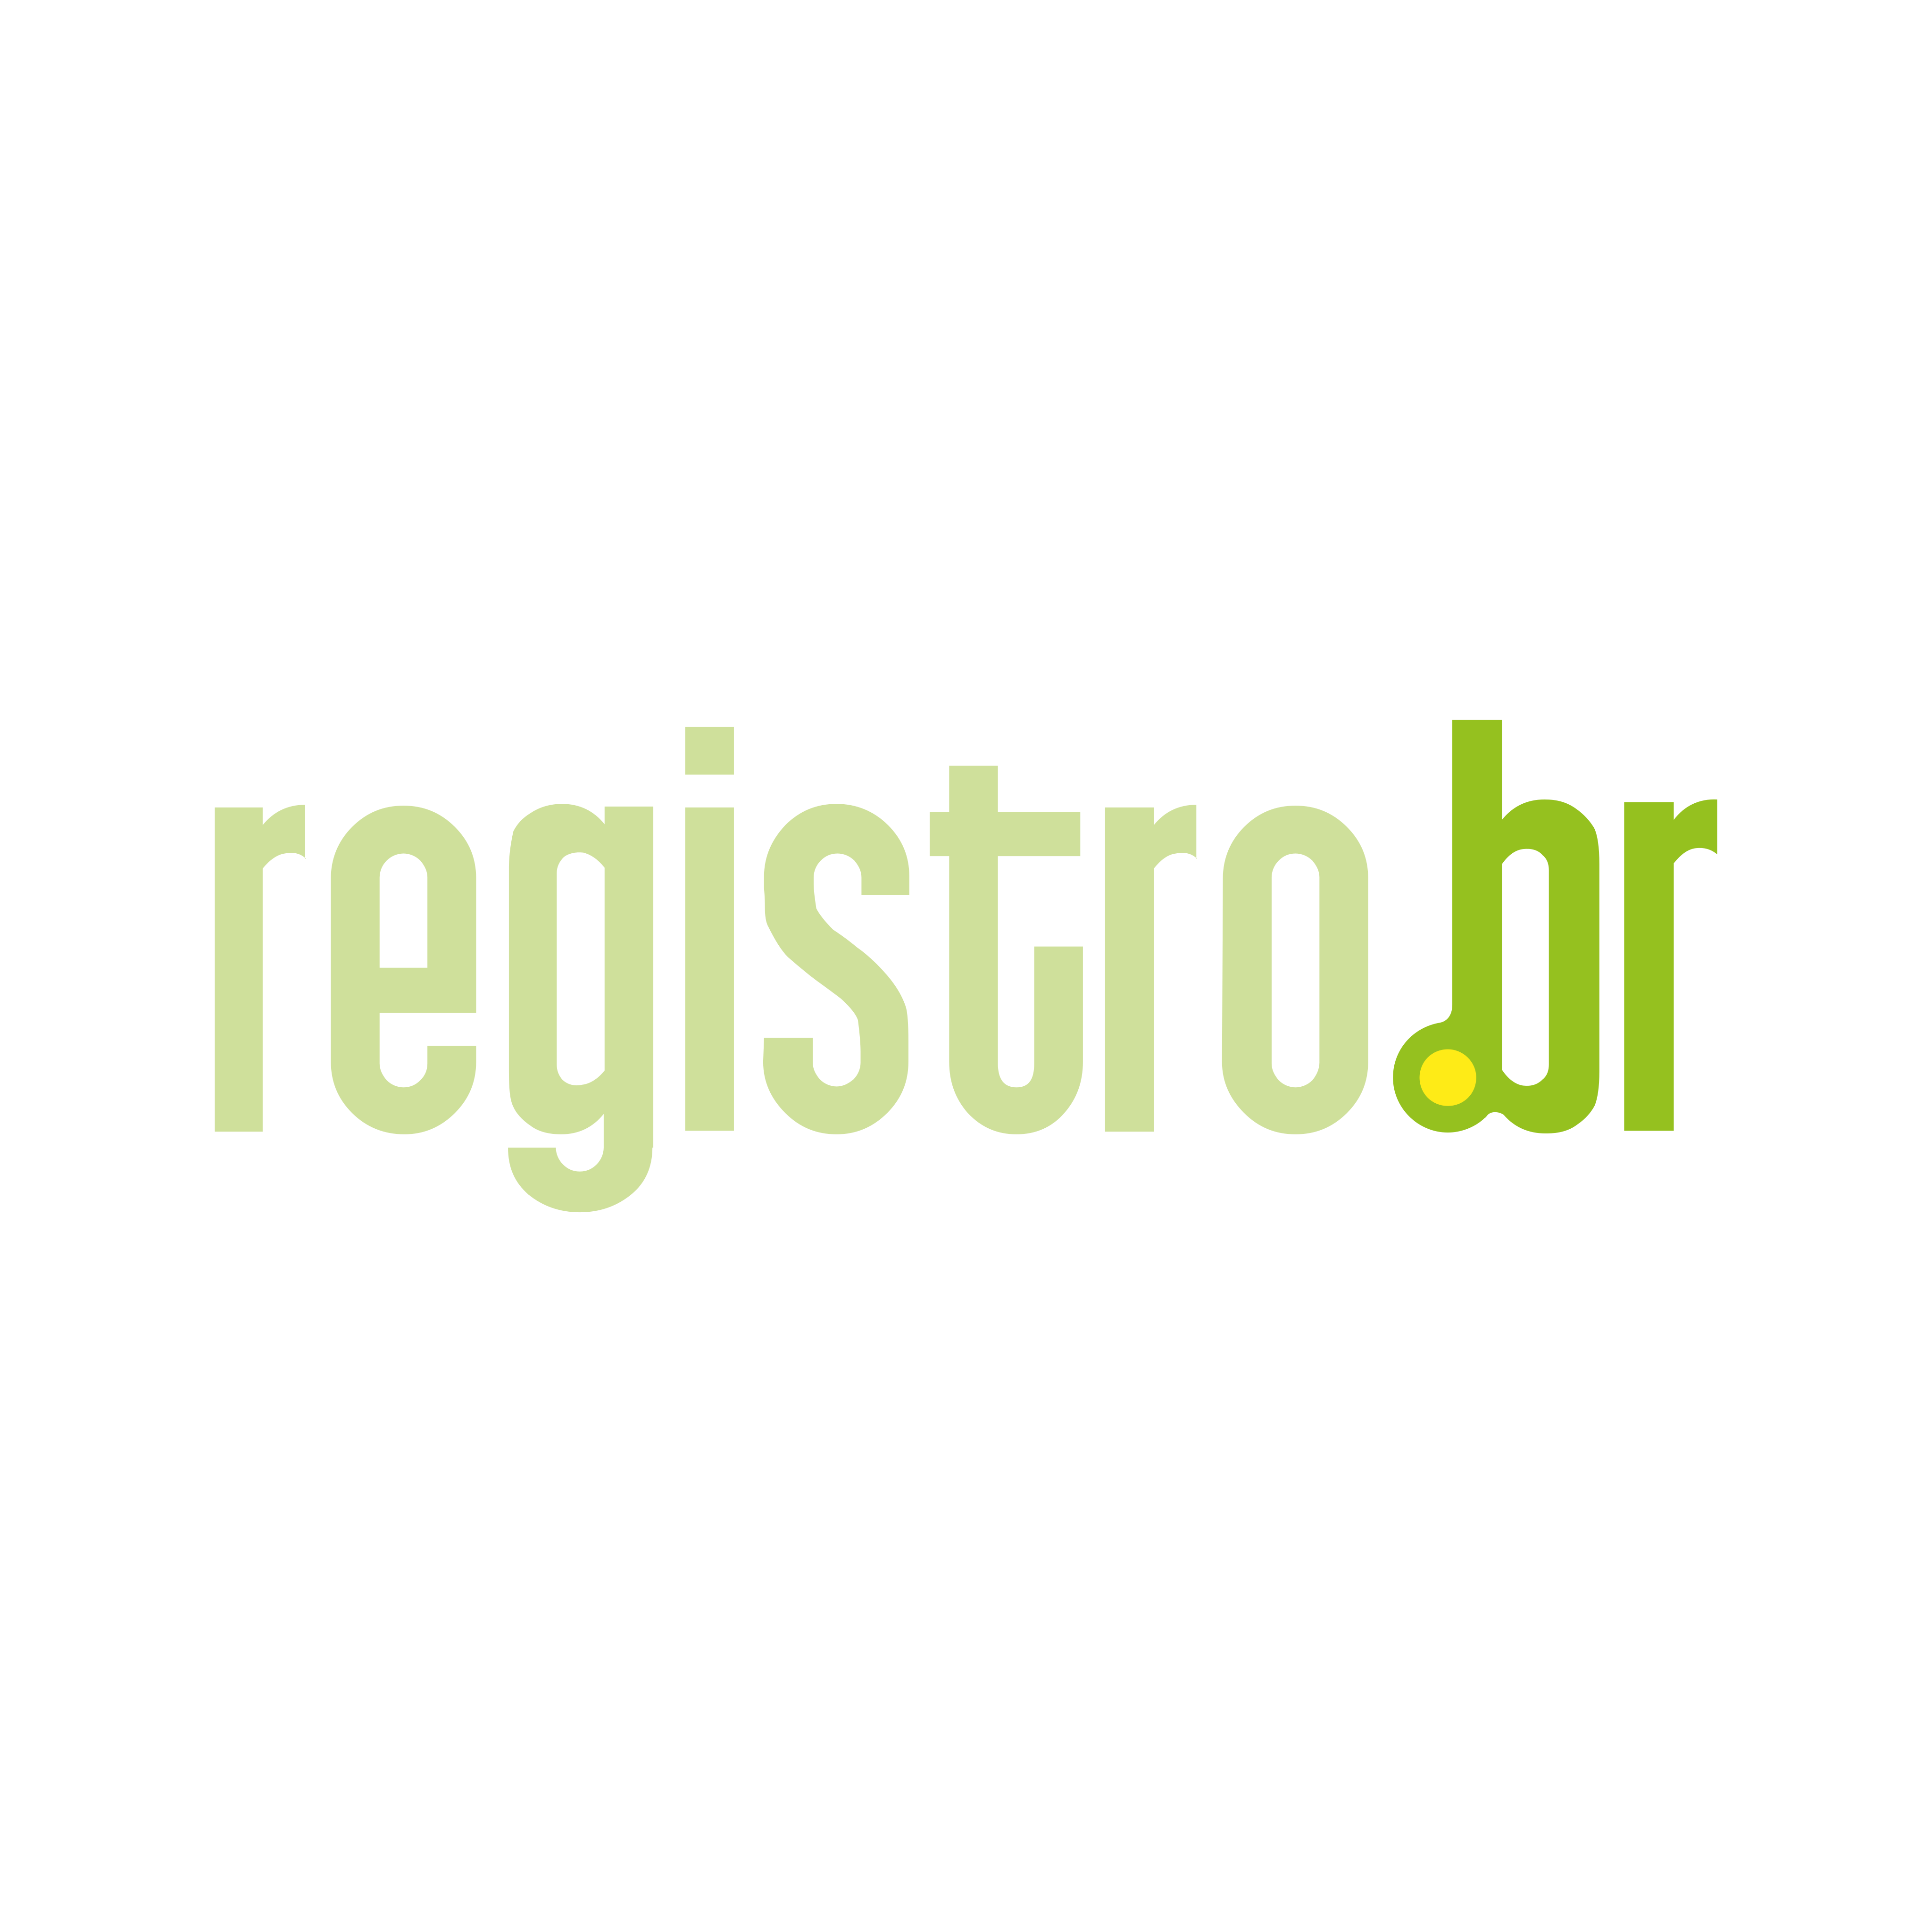 registro.br Logo PNG.